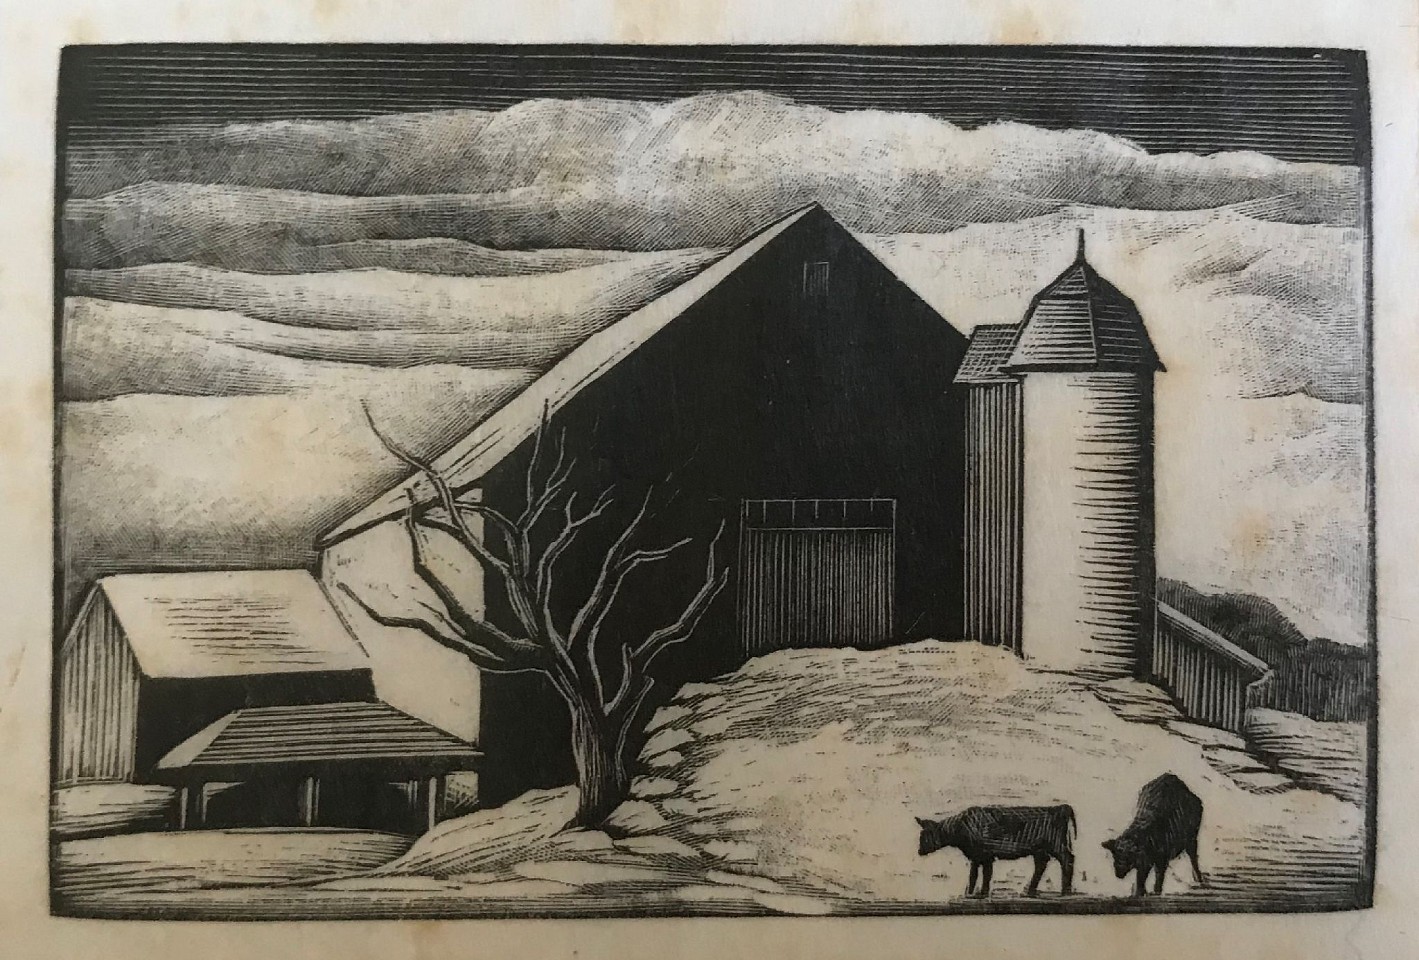 Thomas Willoughby Nason, Barn in Winter, 1949
wood engraving,, 2 1/4" x 3 7/16" , BPL #303
THFA 05/17.06
$450